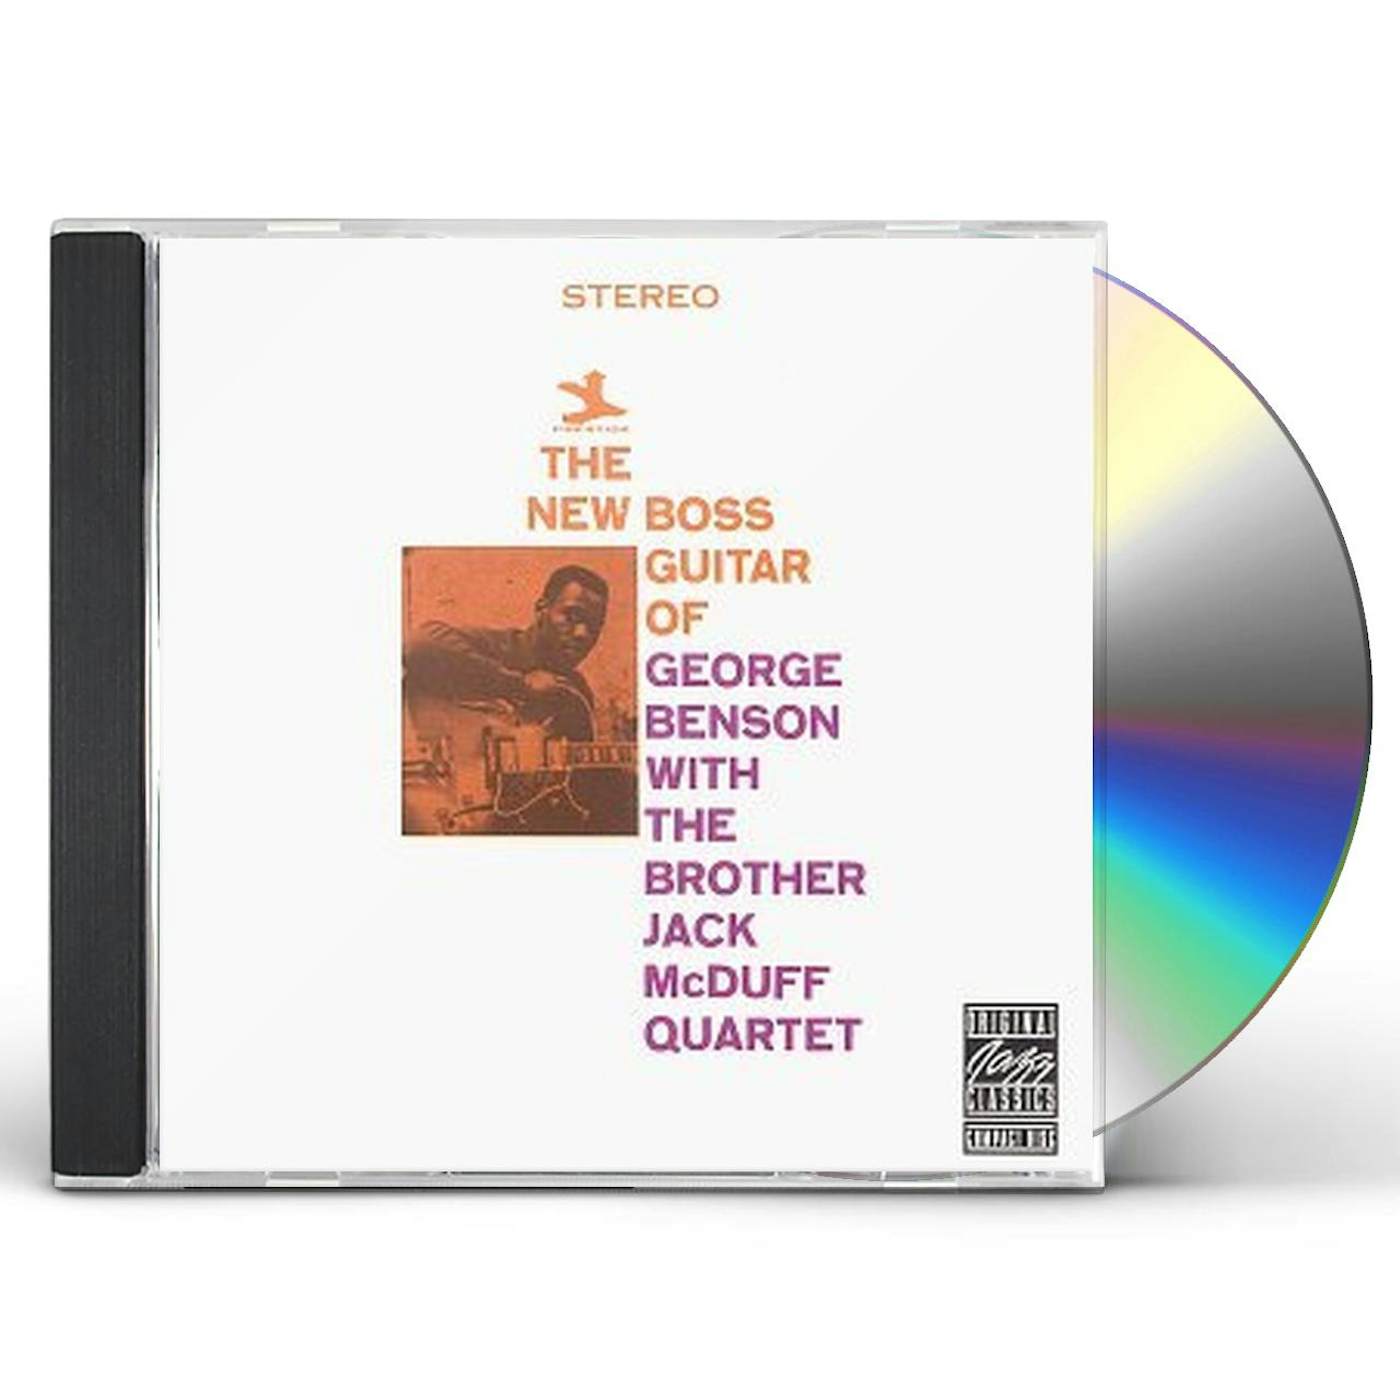 NEW BOSS GUITAR OF GEORGE BENSON CD